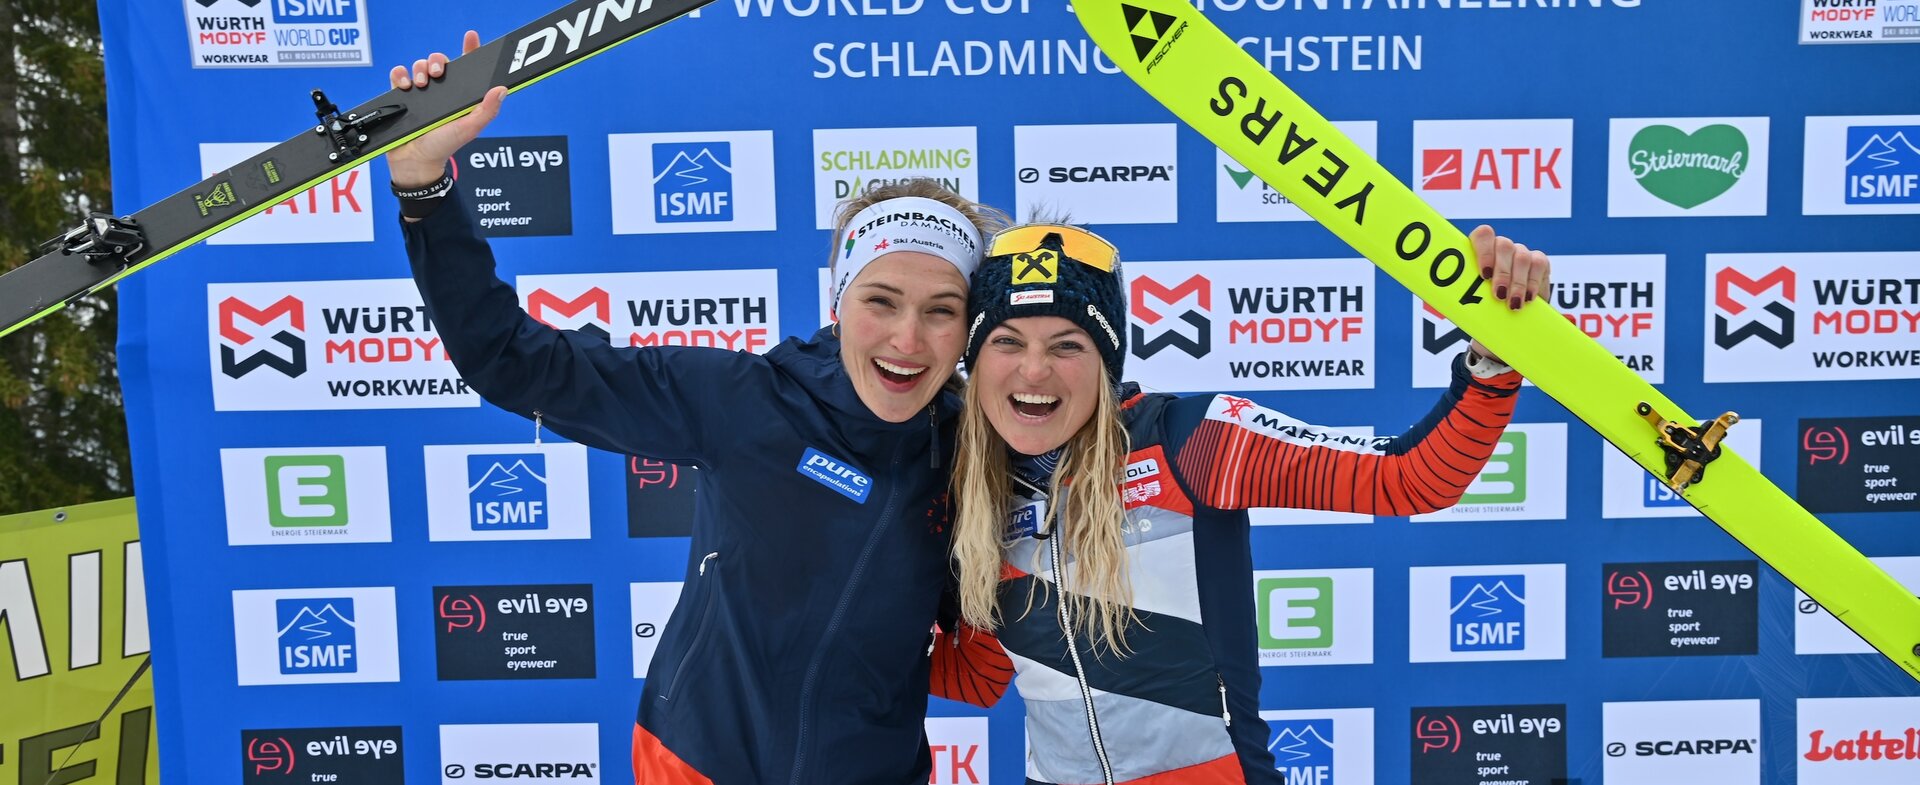 © Ski Austria / Weigl